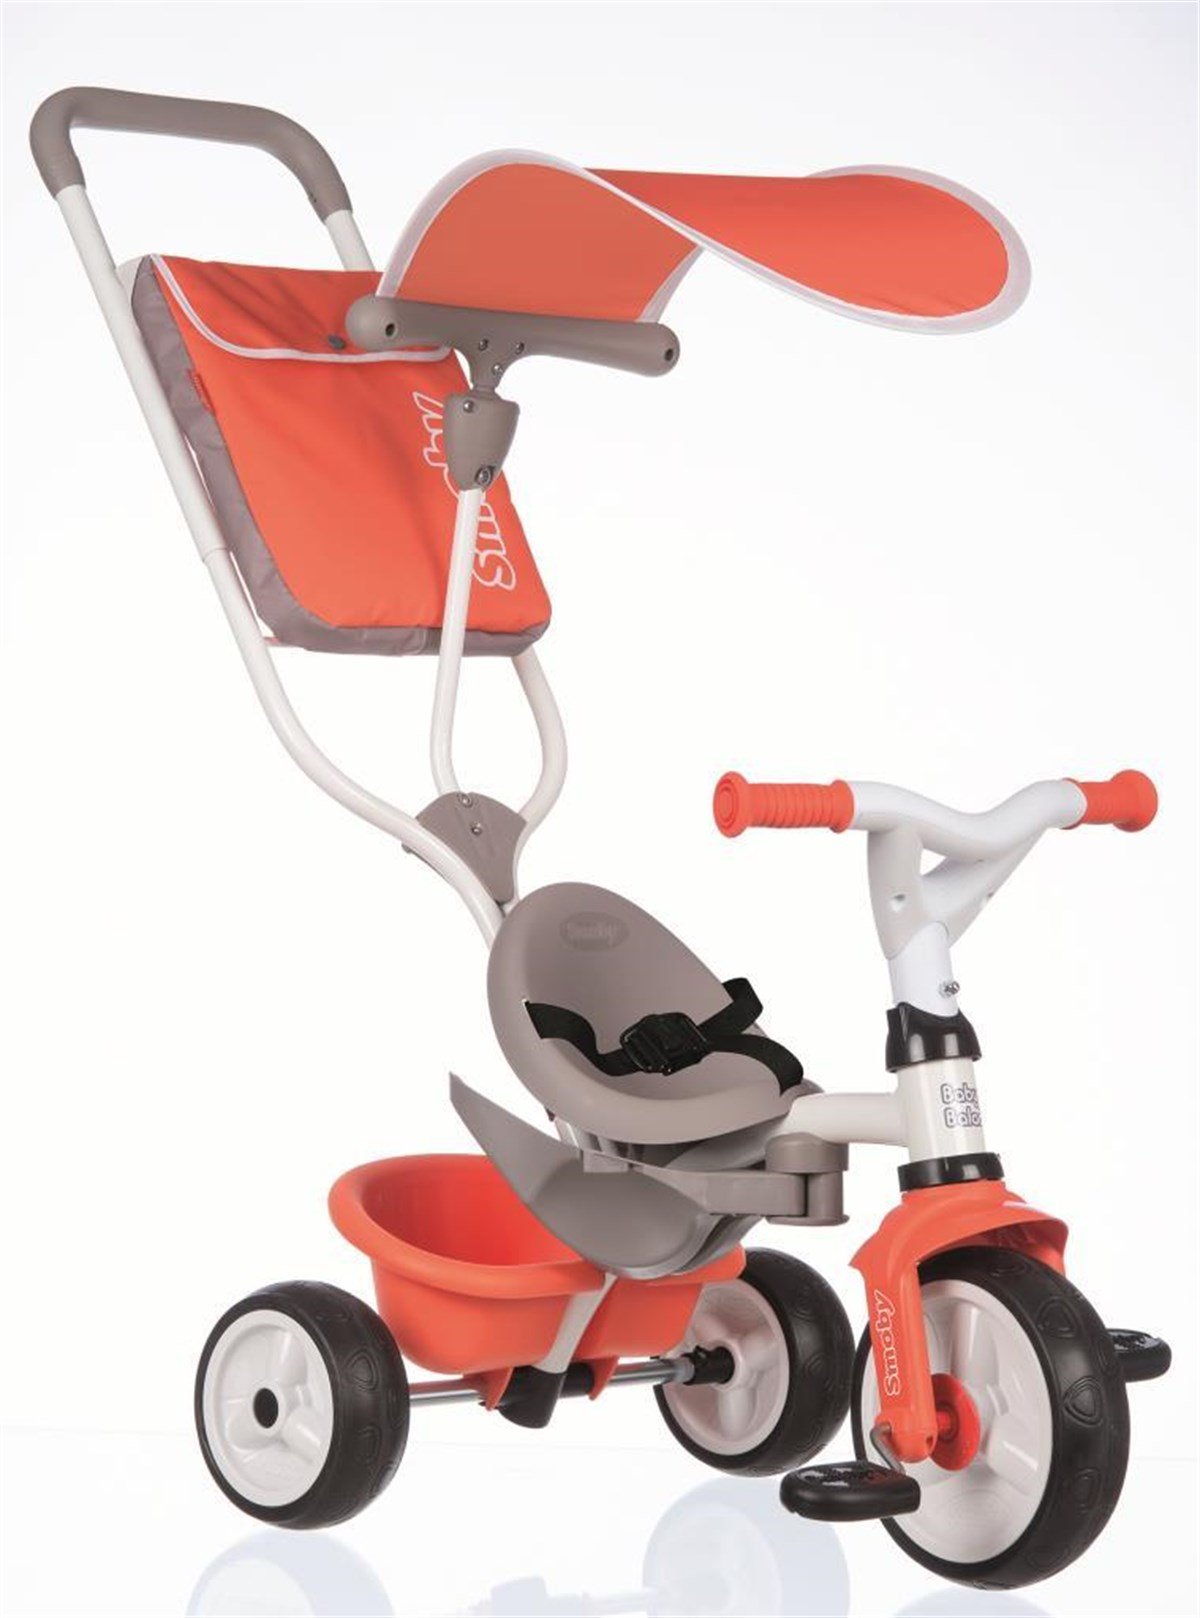 Smoby 3 Tekerlekli Çocuk Bisikleti 3'ü1 Arada Set - Kırmızı 741105 | Toysall